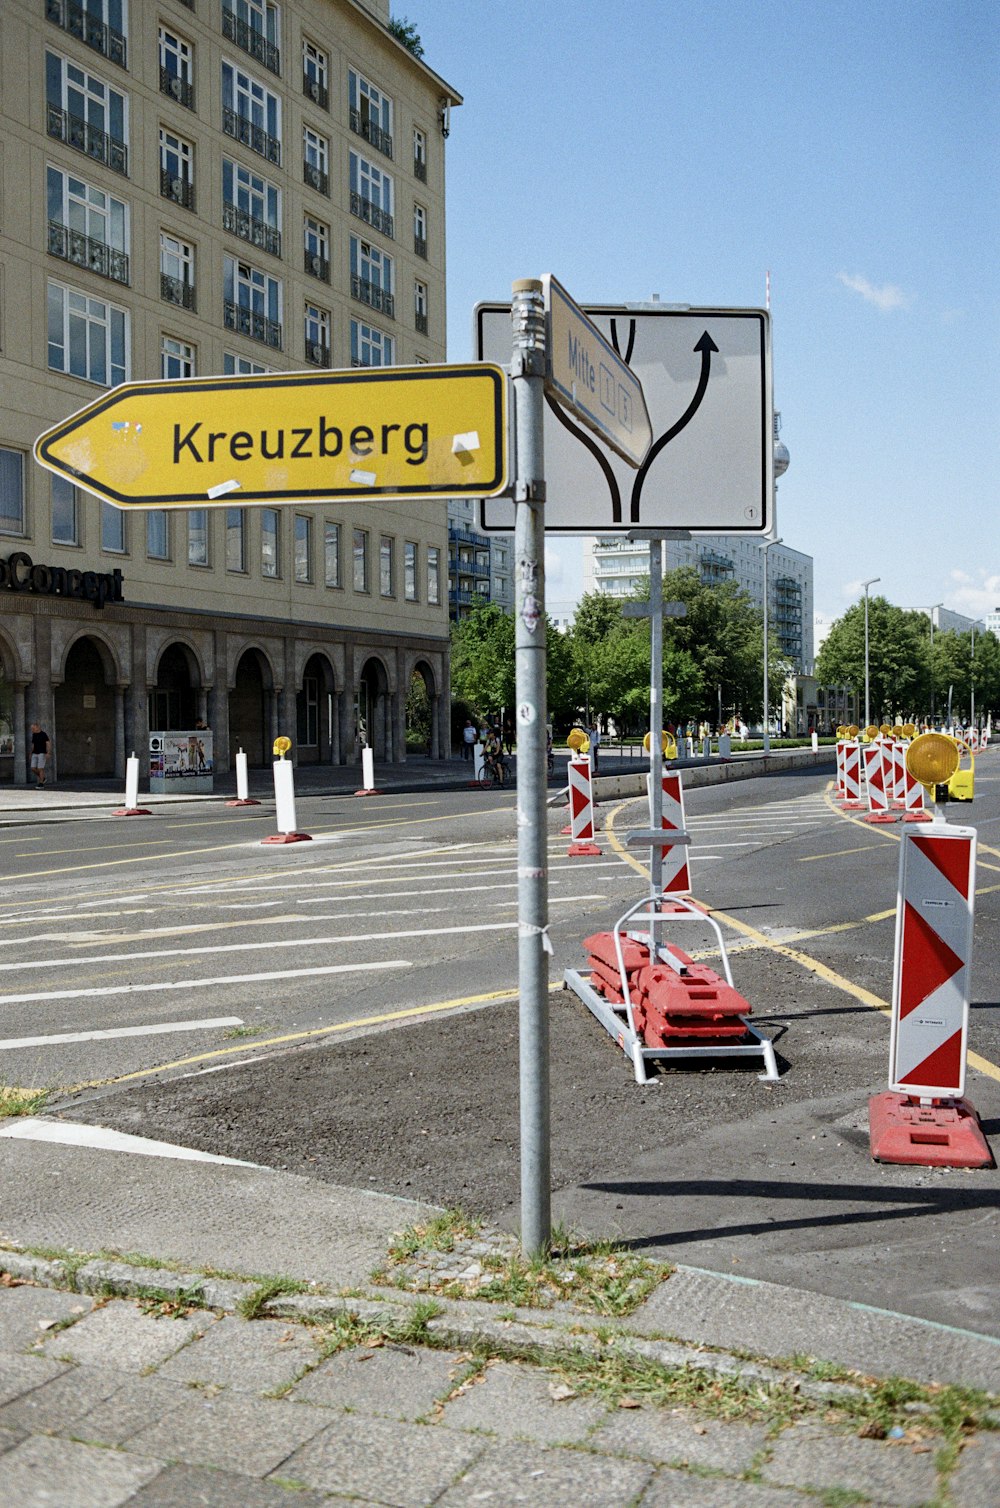 Kreuzberg signage